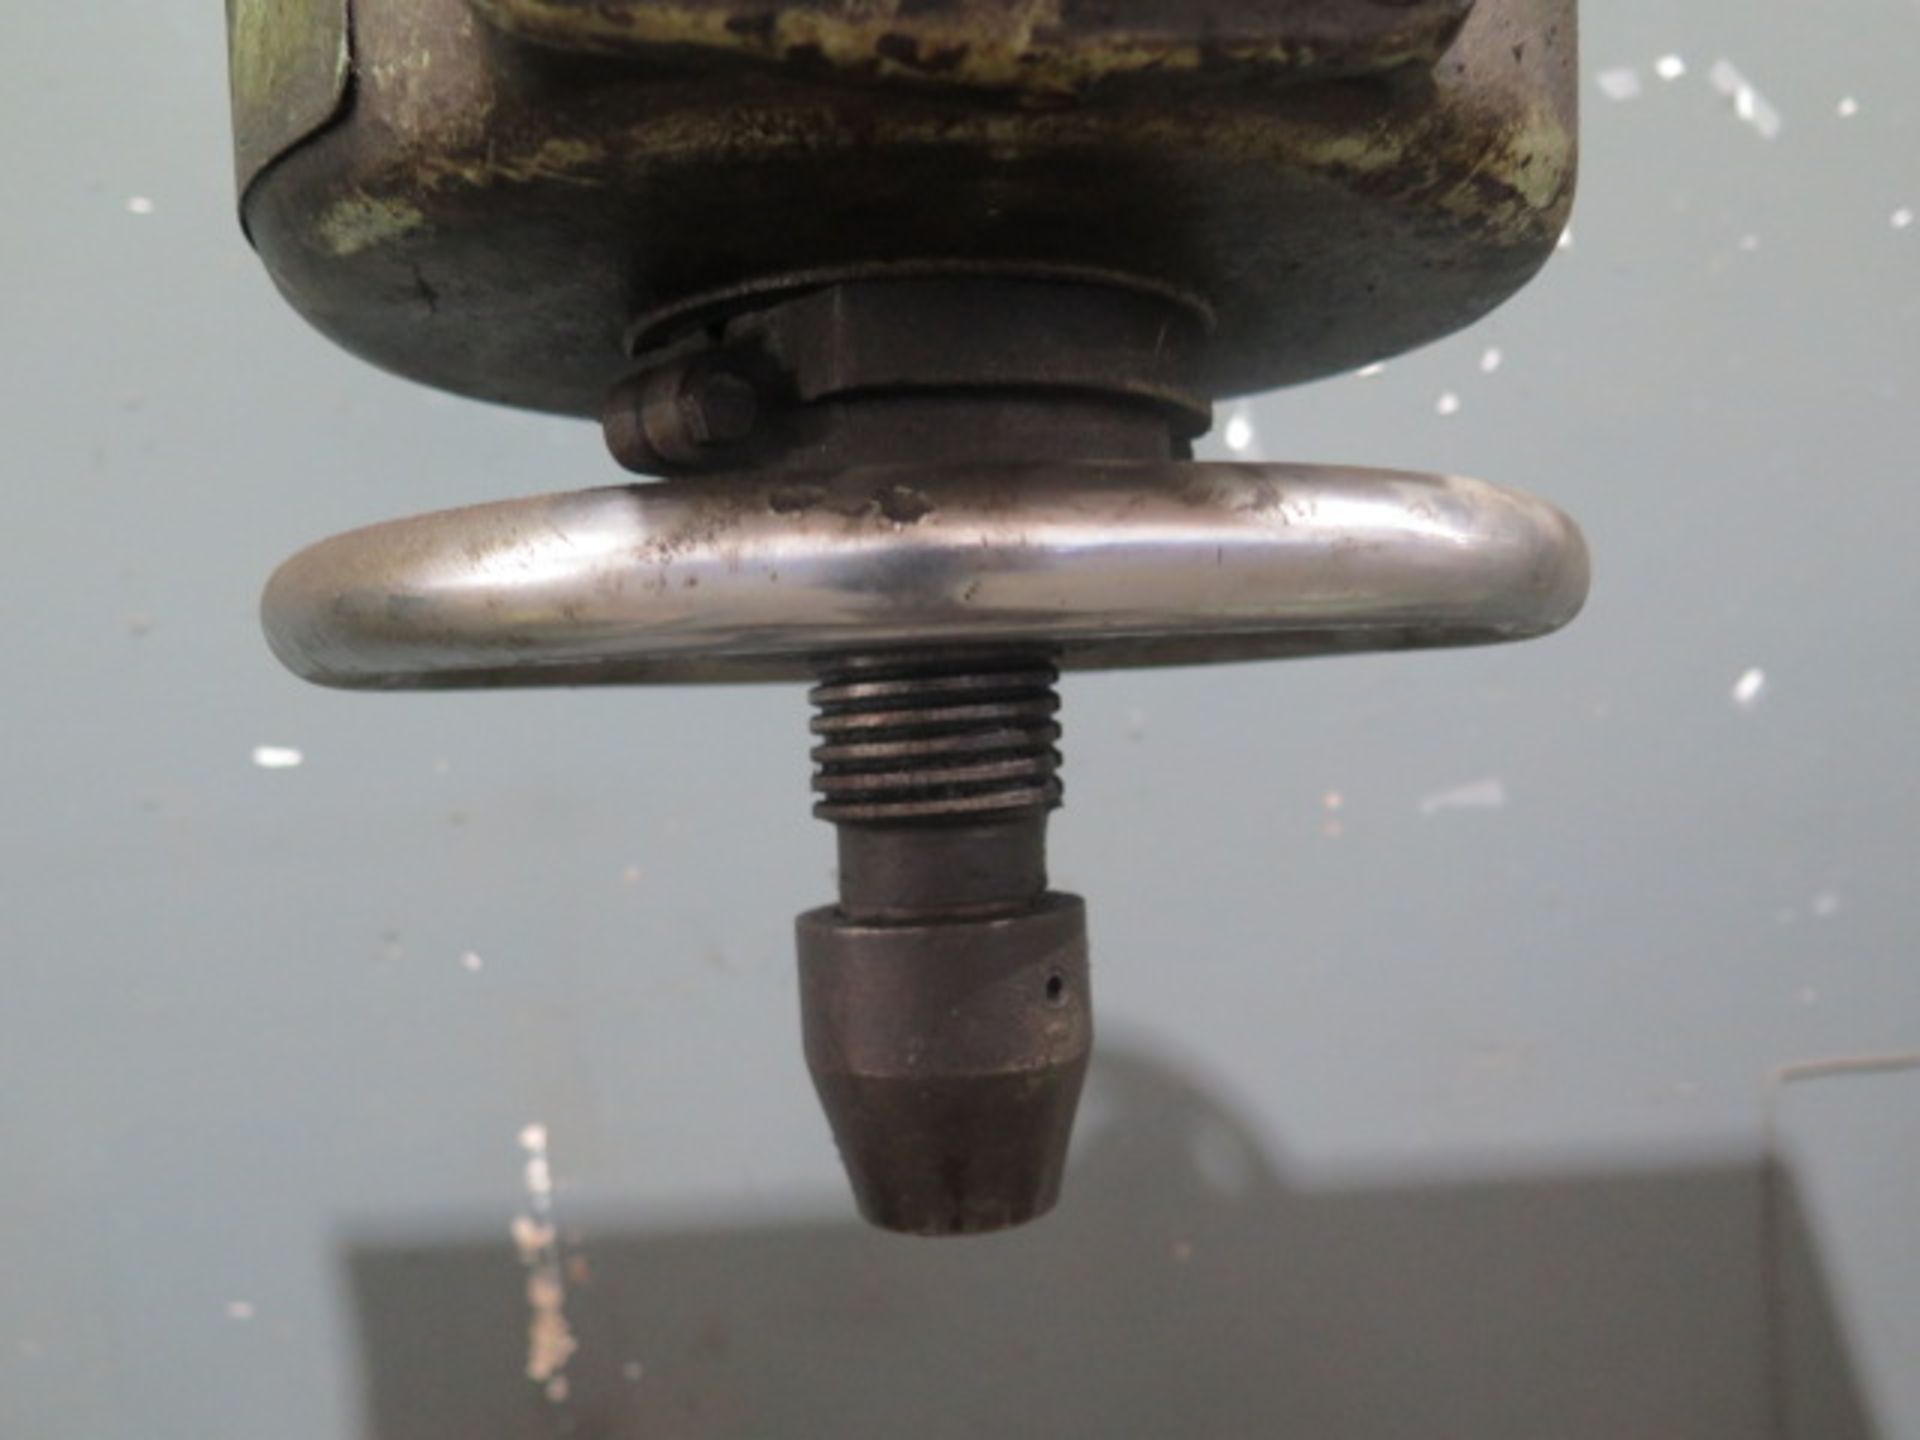 Dake mdl. 30H 30 Ton Sliding Ram Hydraulic H-Frame Press w/ Speed Wheel (SOLD AS-IS - NO WARRANTY) - Image 4 of 5